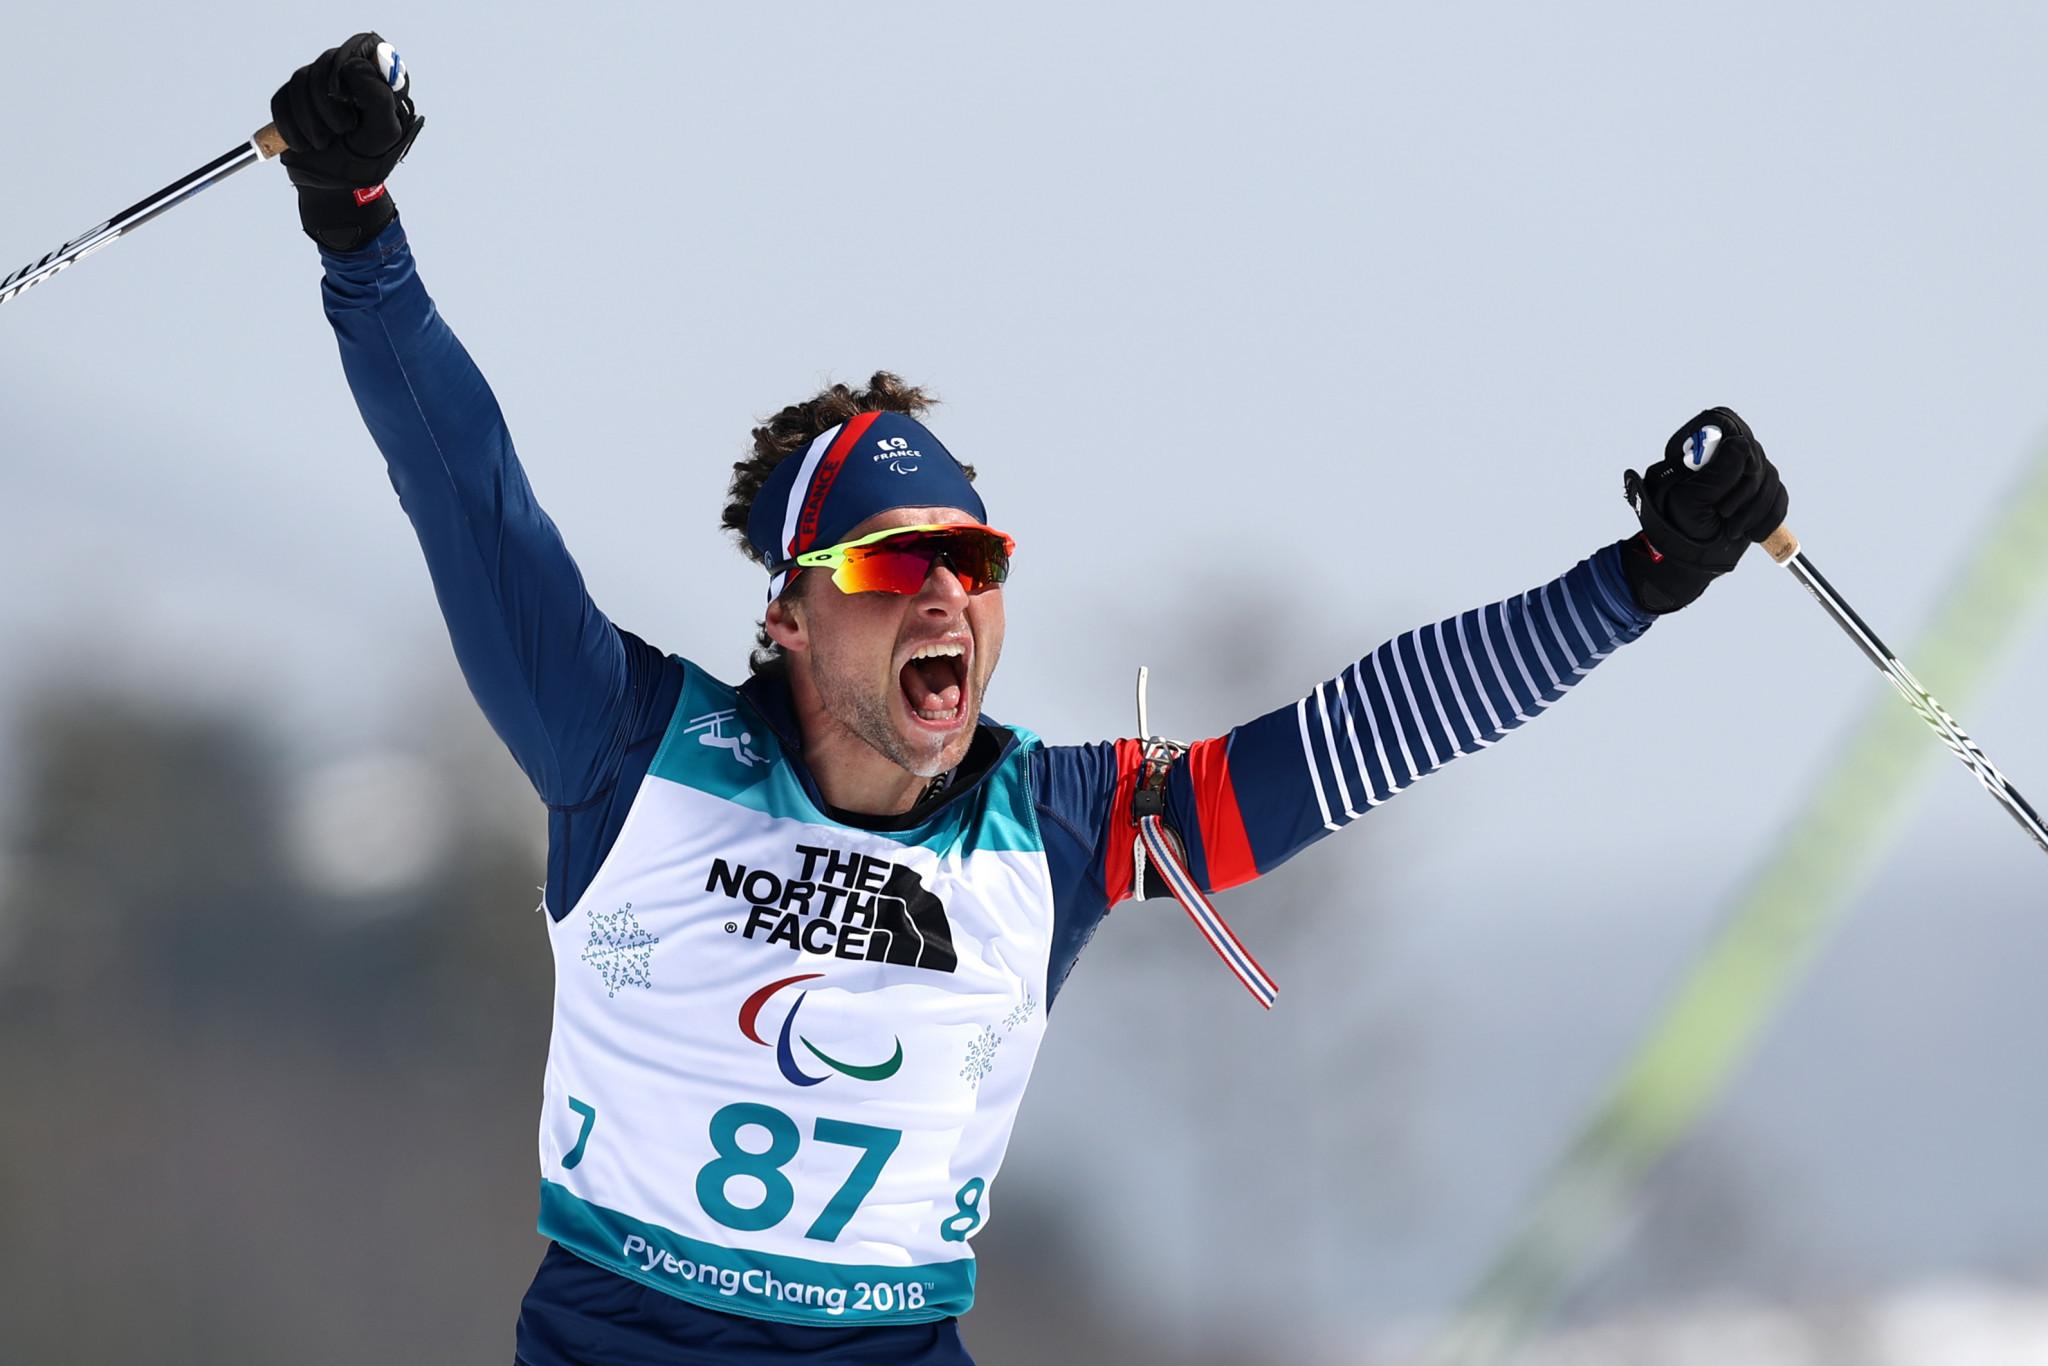 Benjamin Daviet was in tears as he won the men's 7.5km standing biathlon title at the Alpensia Biathlon Centre ©Getty Images